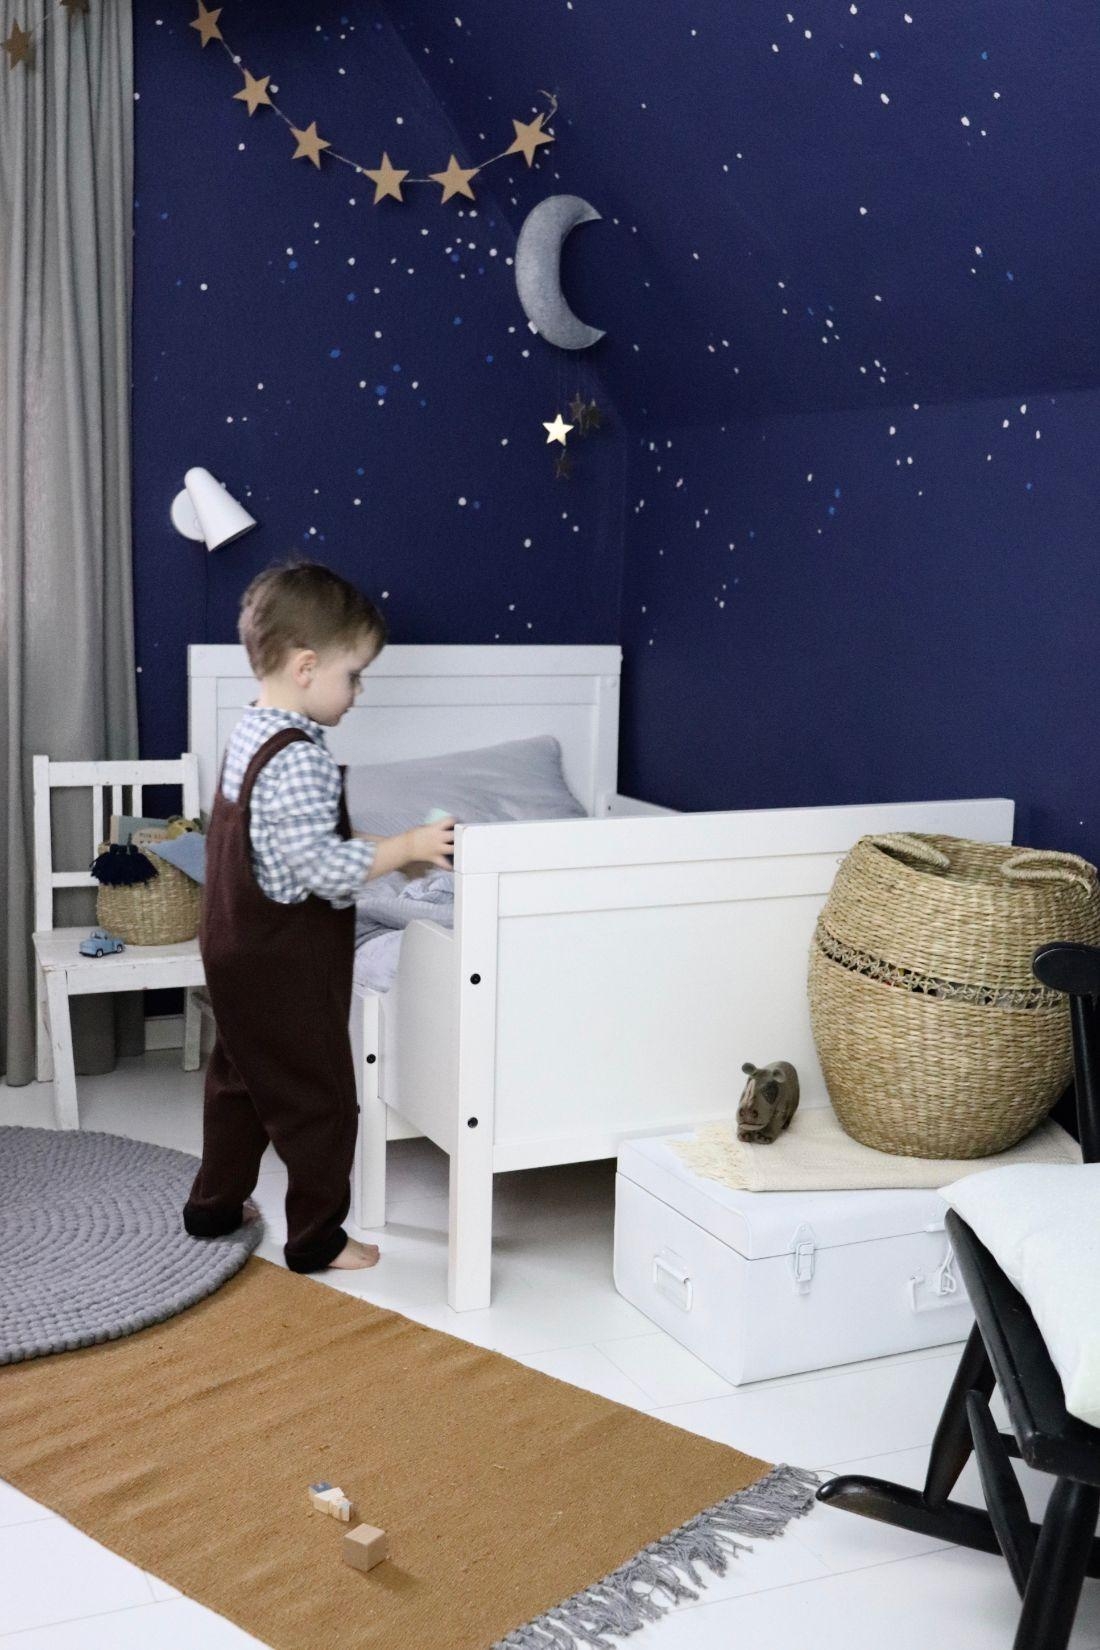 Sternenhimmel im Kinderzimmer
#brittabloggt#kidsroom#blue#stars